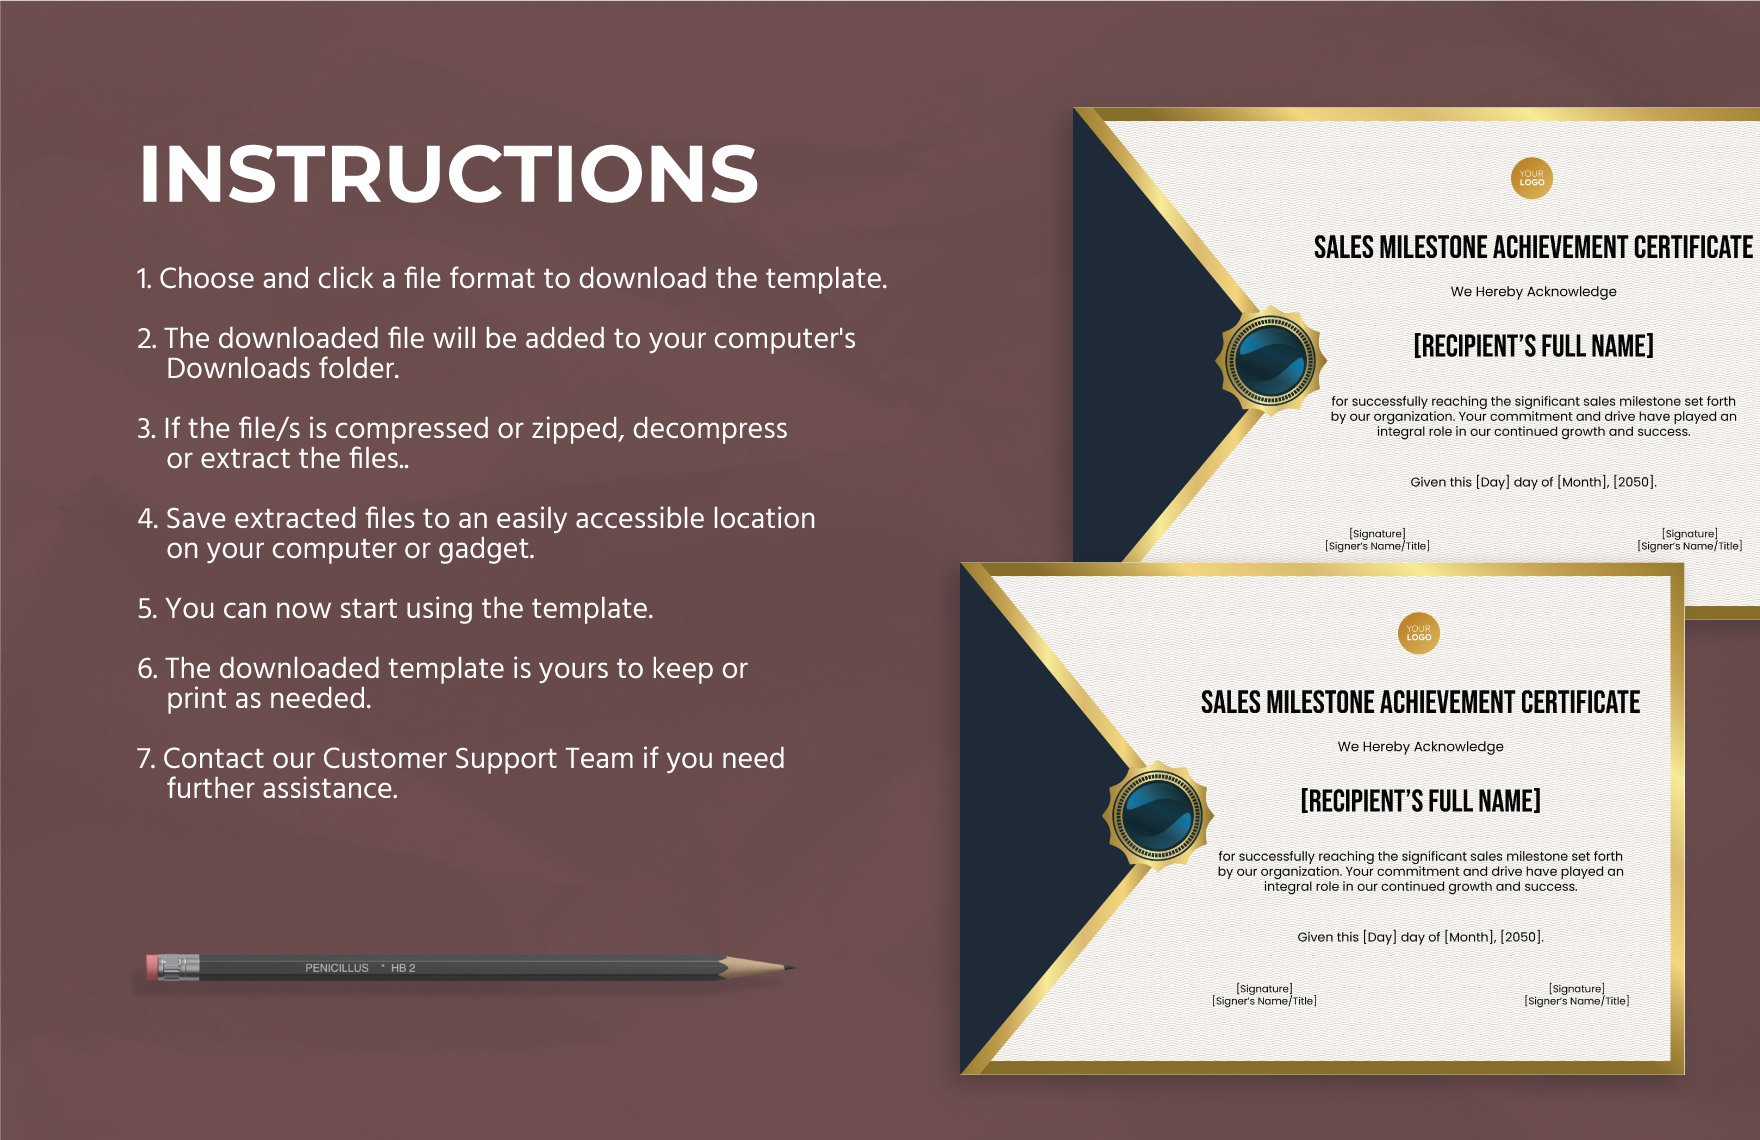 Sales Milestone Achievement Certificate Template